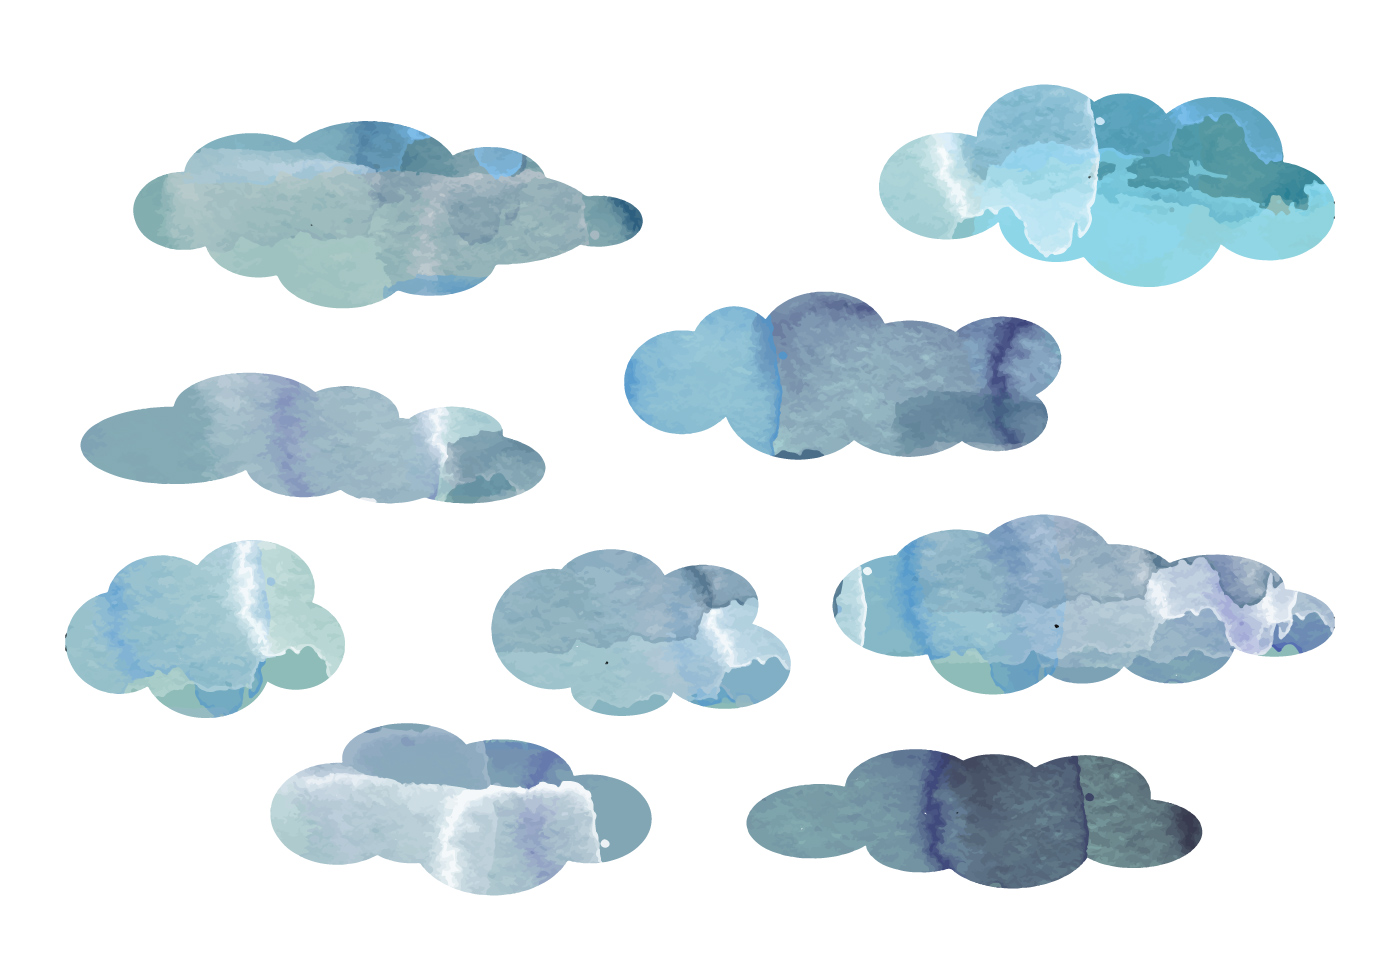 Download Vector Watercolor Cloud Elements - Download Free Vectors ...